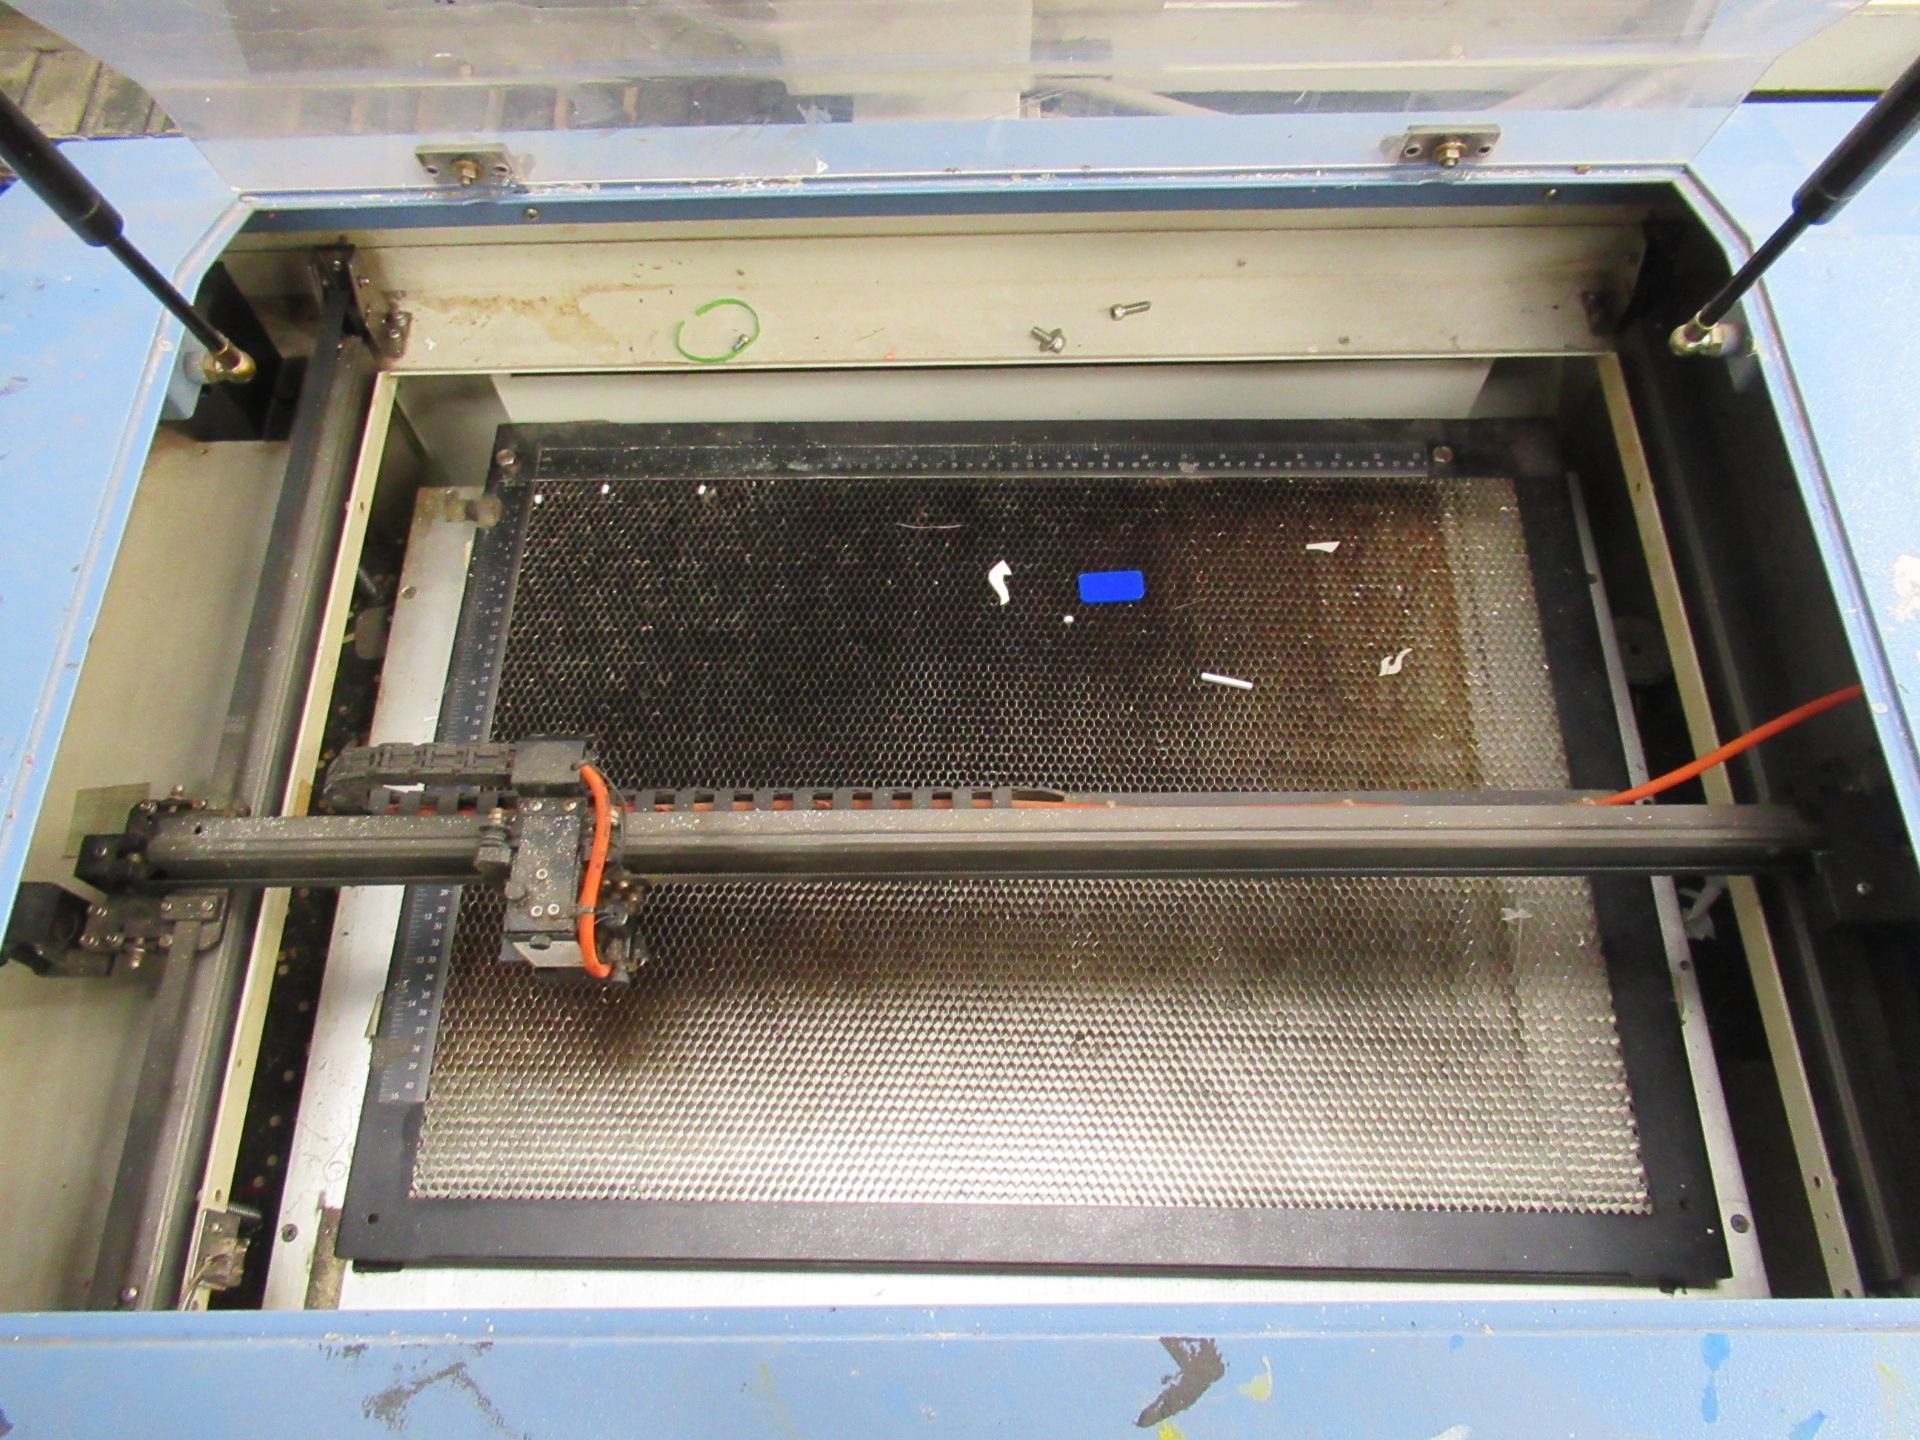 A Mercury Lazer Pro Lazer Engraver comes with an advantage AD400TS filter unit - Image 6 of 9